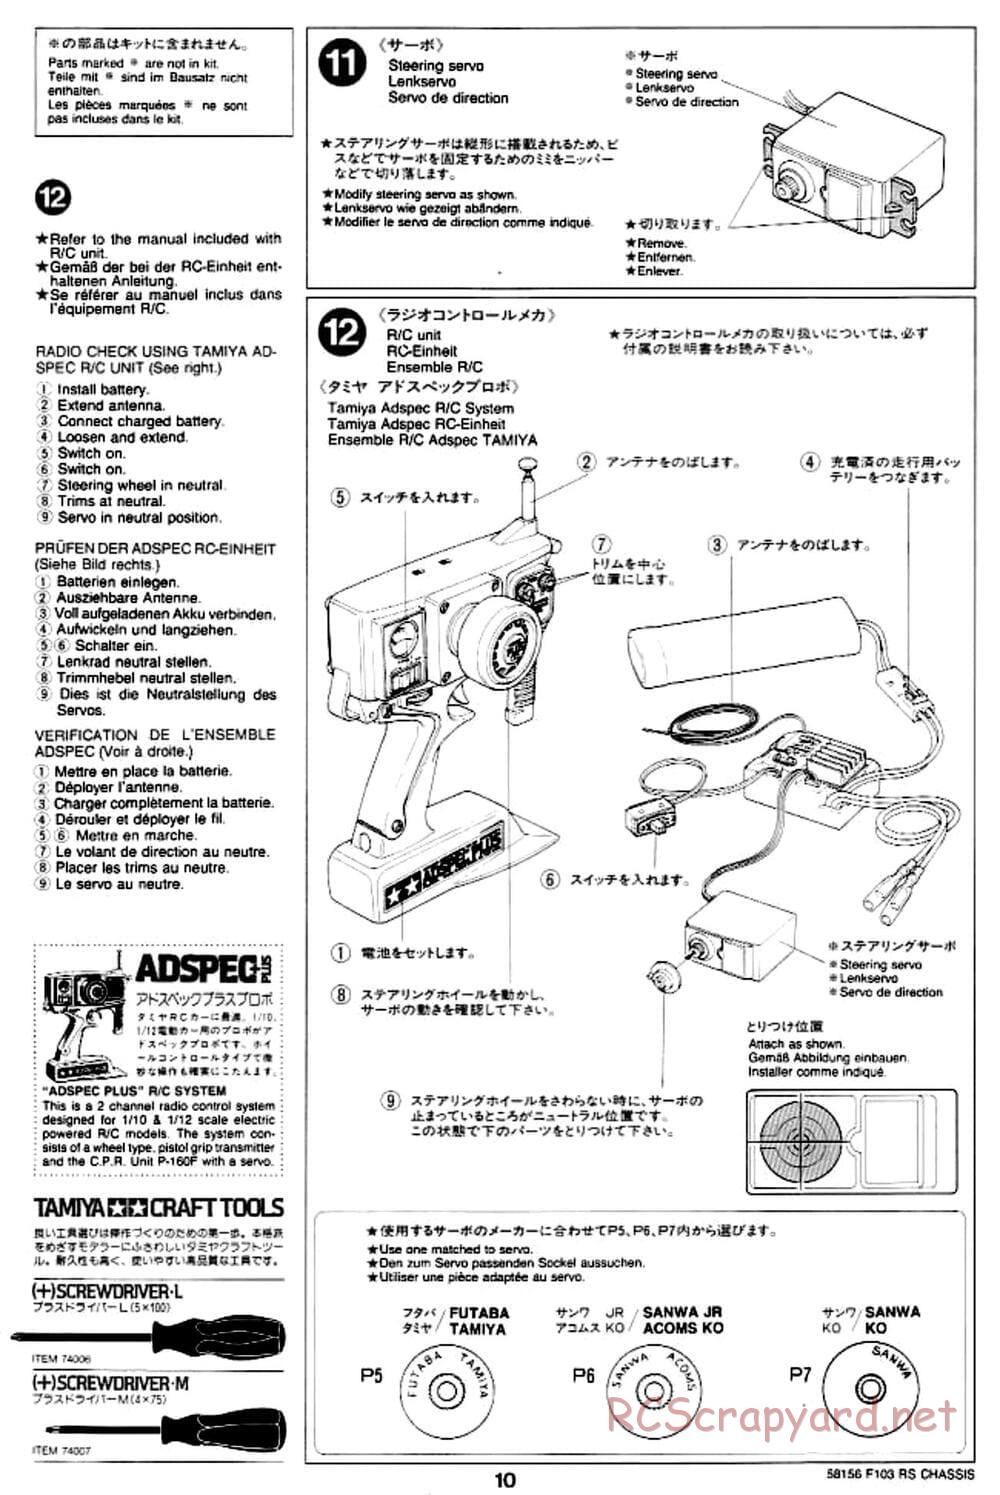 Tamiya - F103RS Chassis - Manual - Page 10